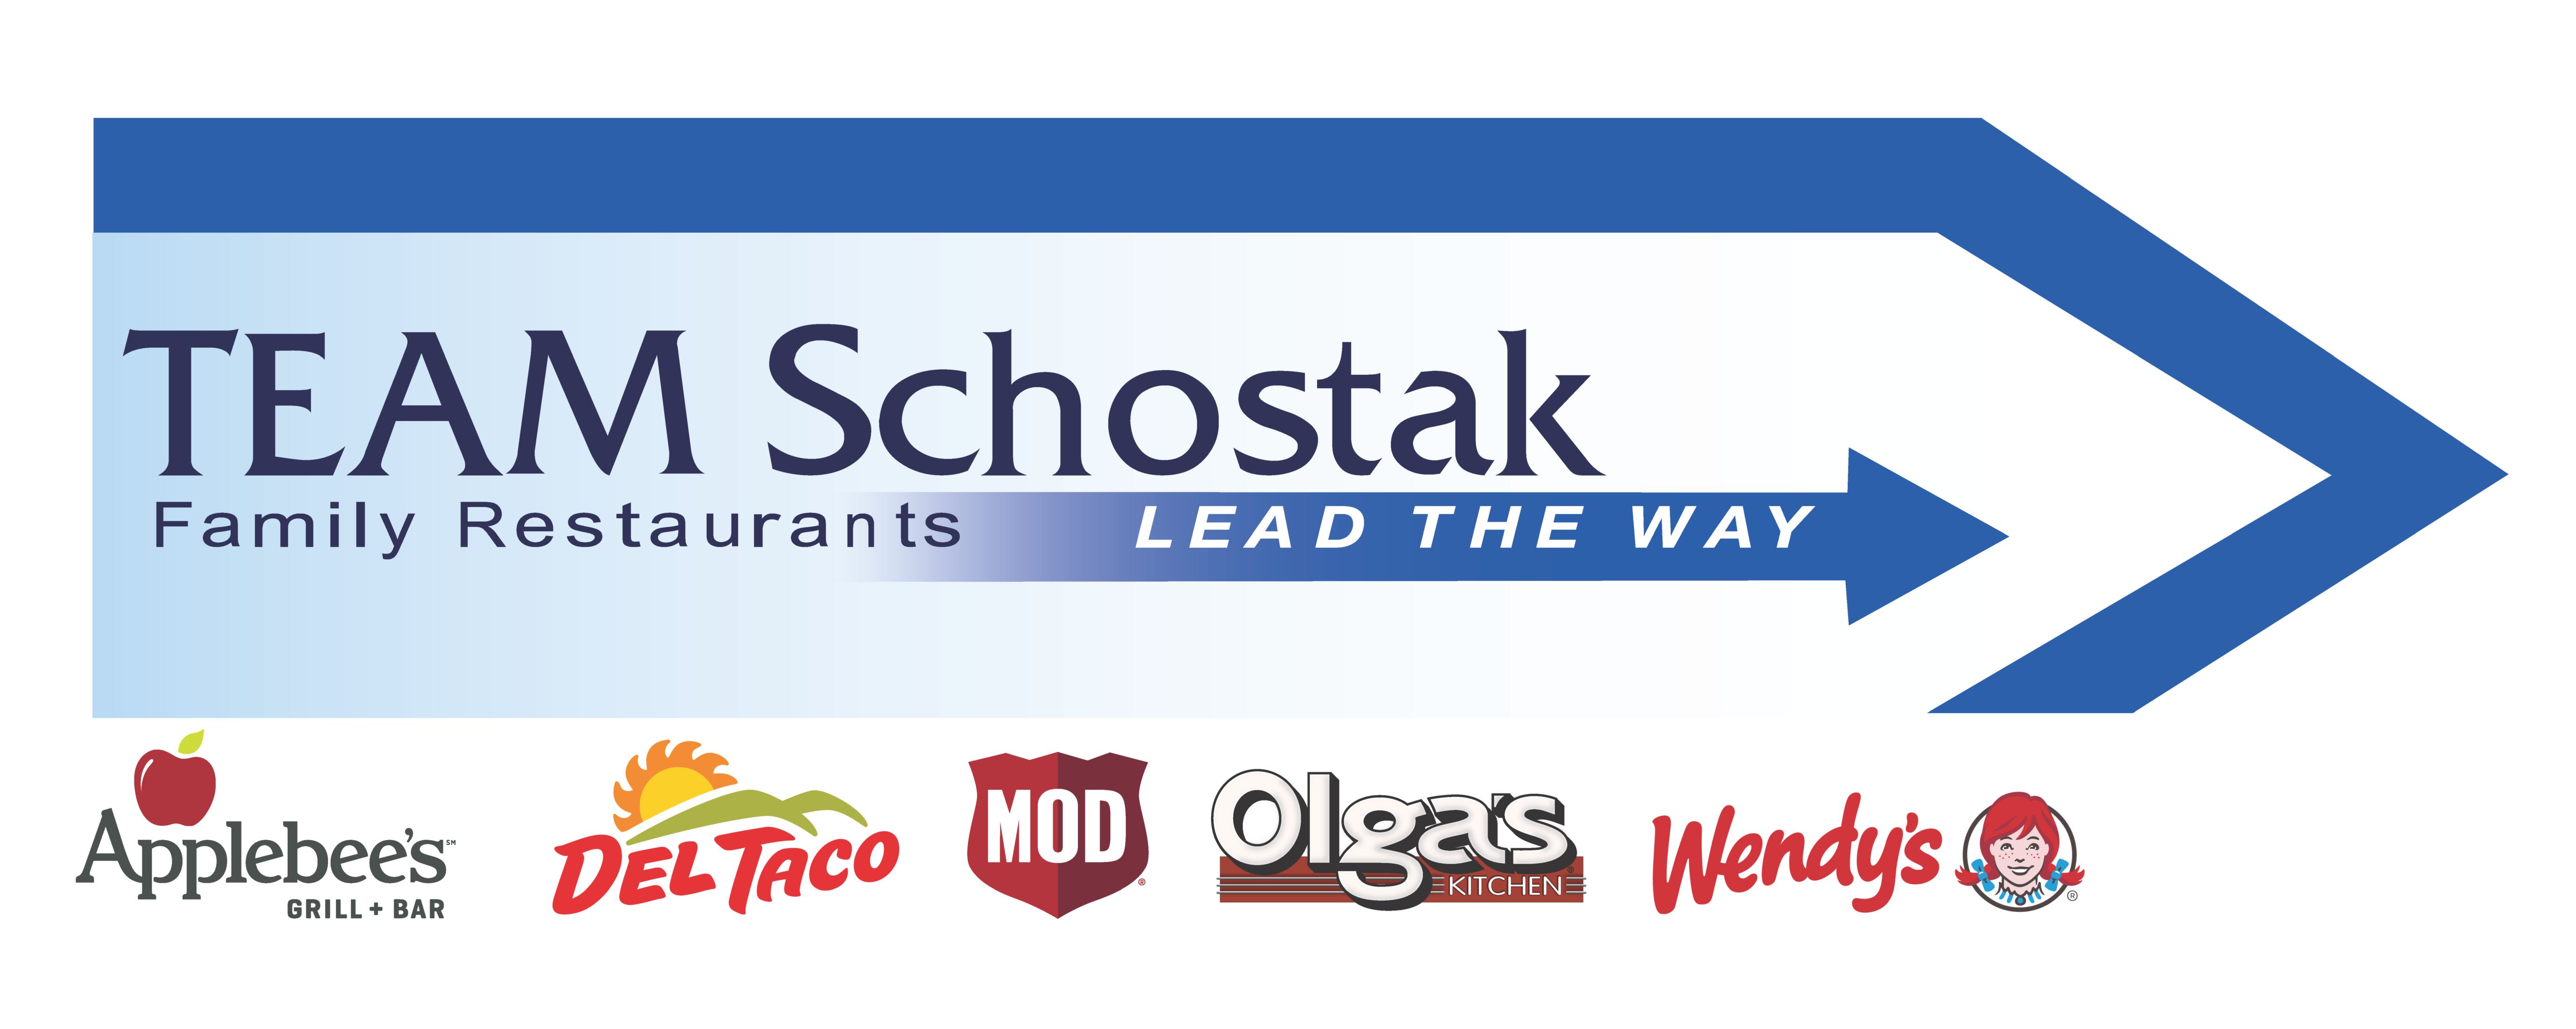 TEAM Schostak Family Restaurants logo